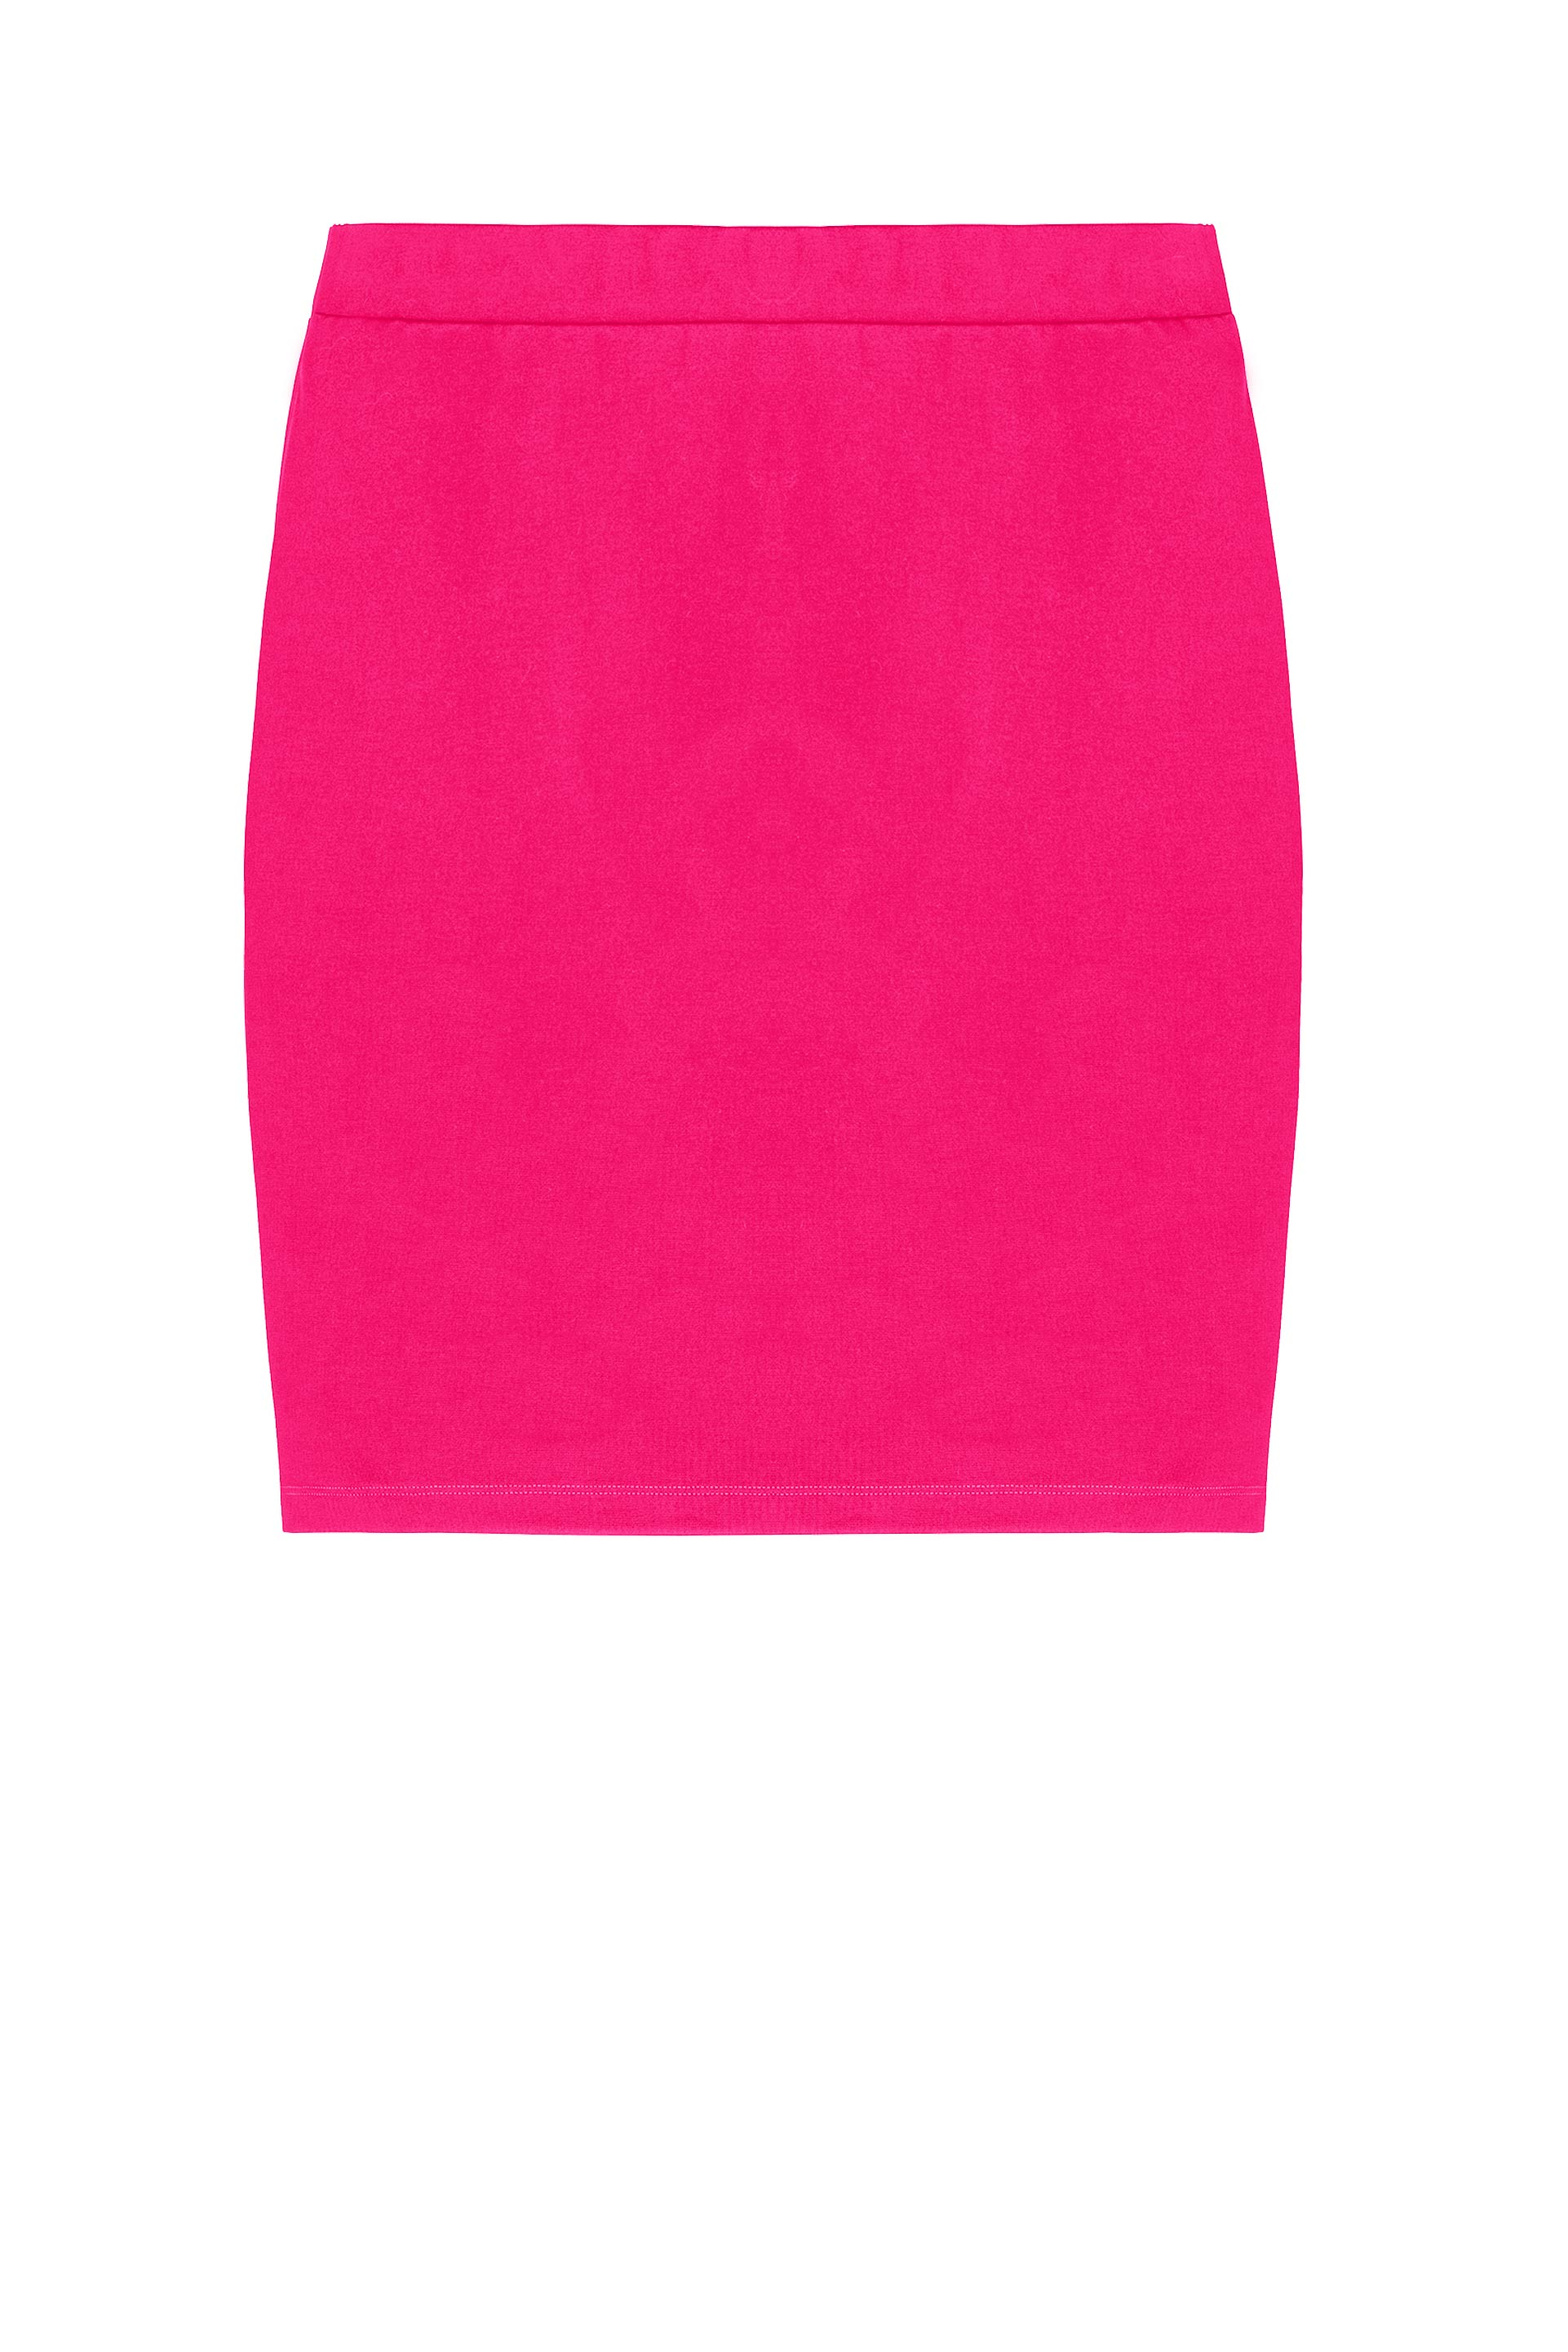 42115_short_ponte_skirt_neon_pink.jpg